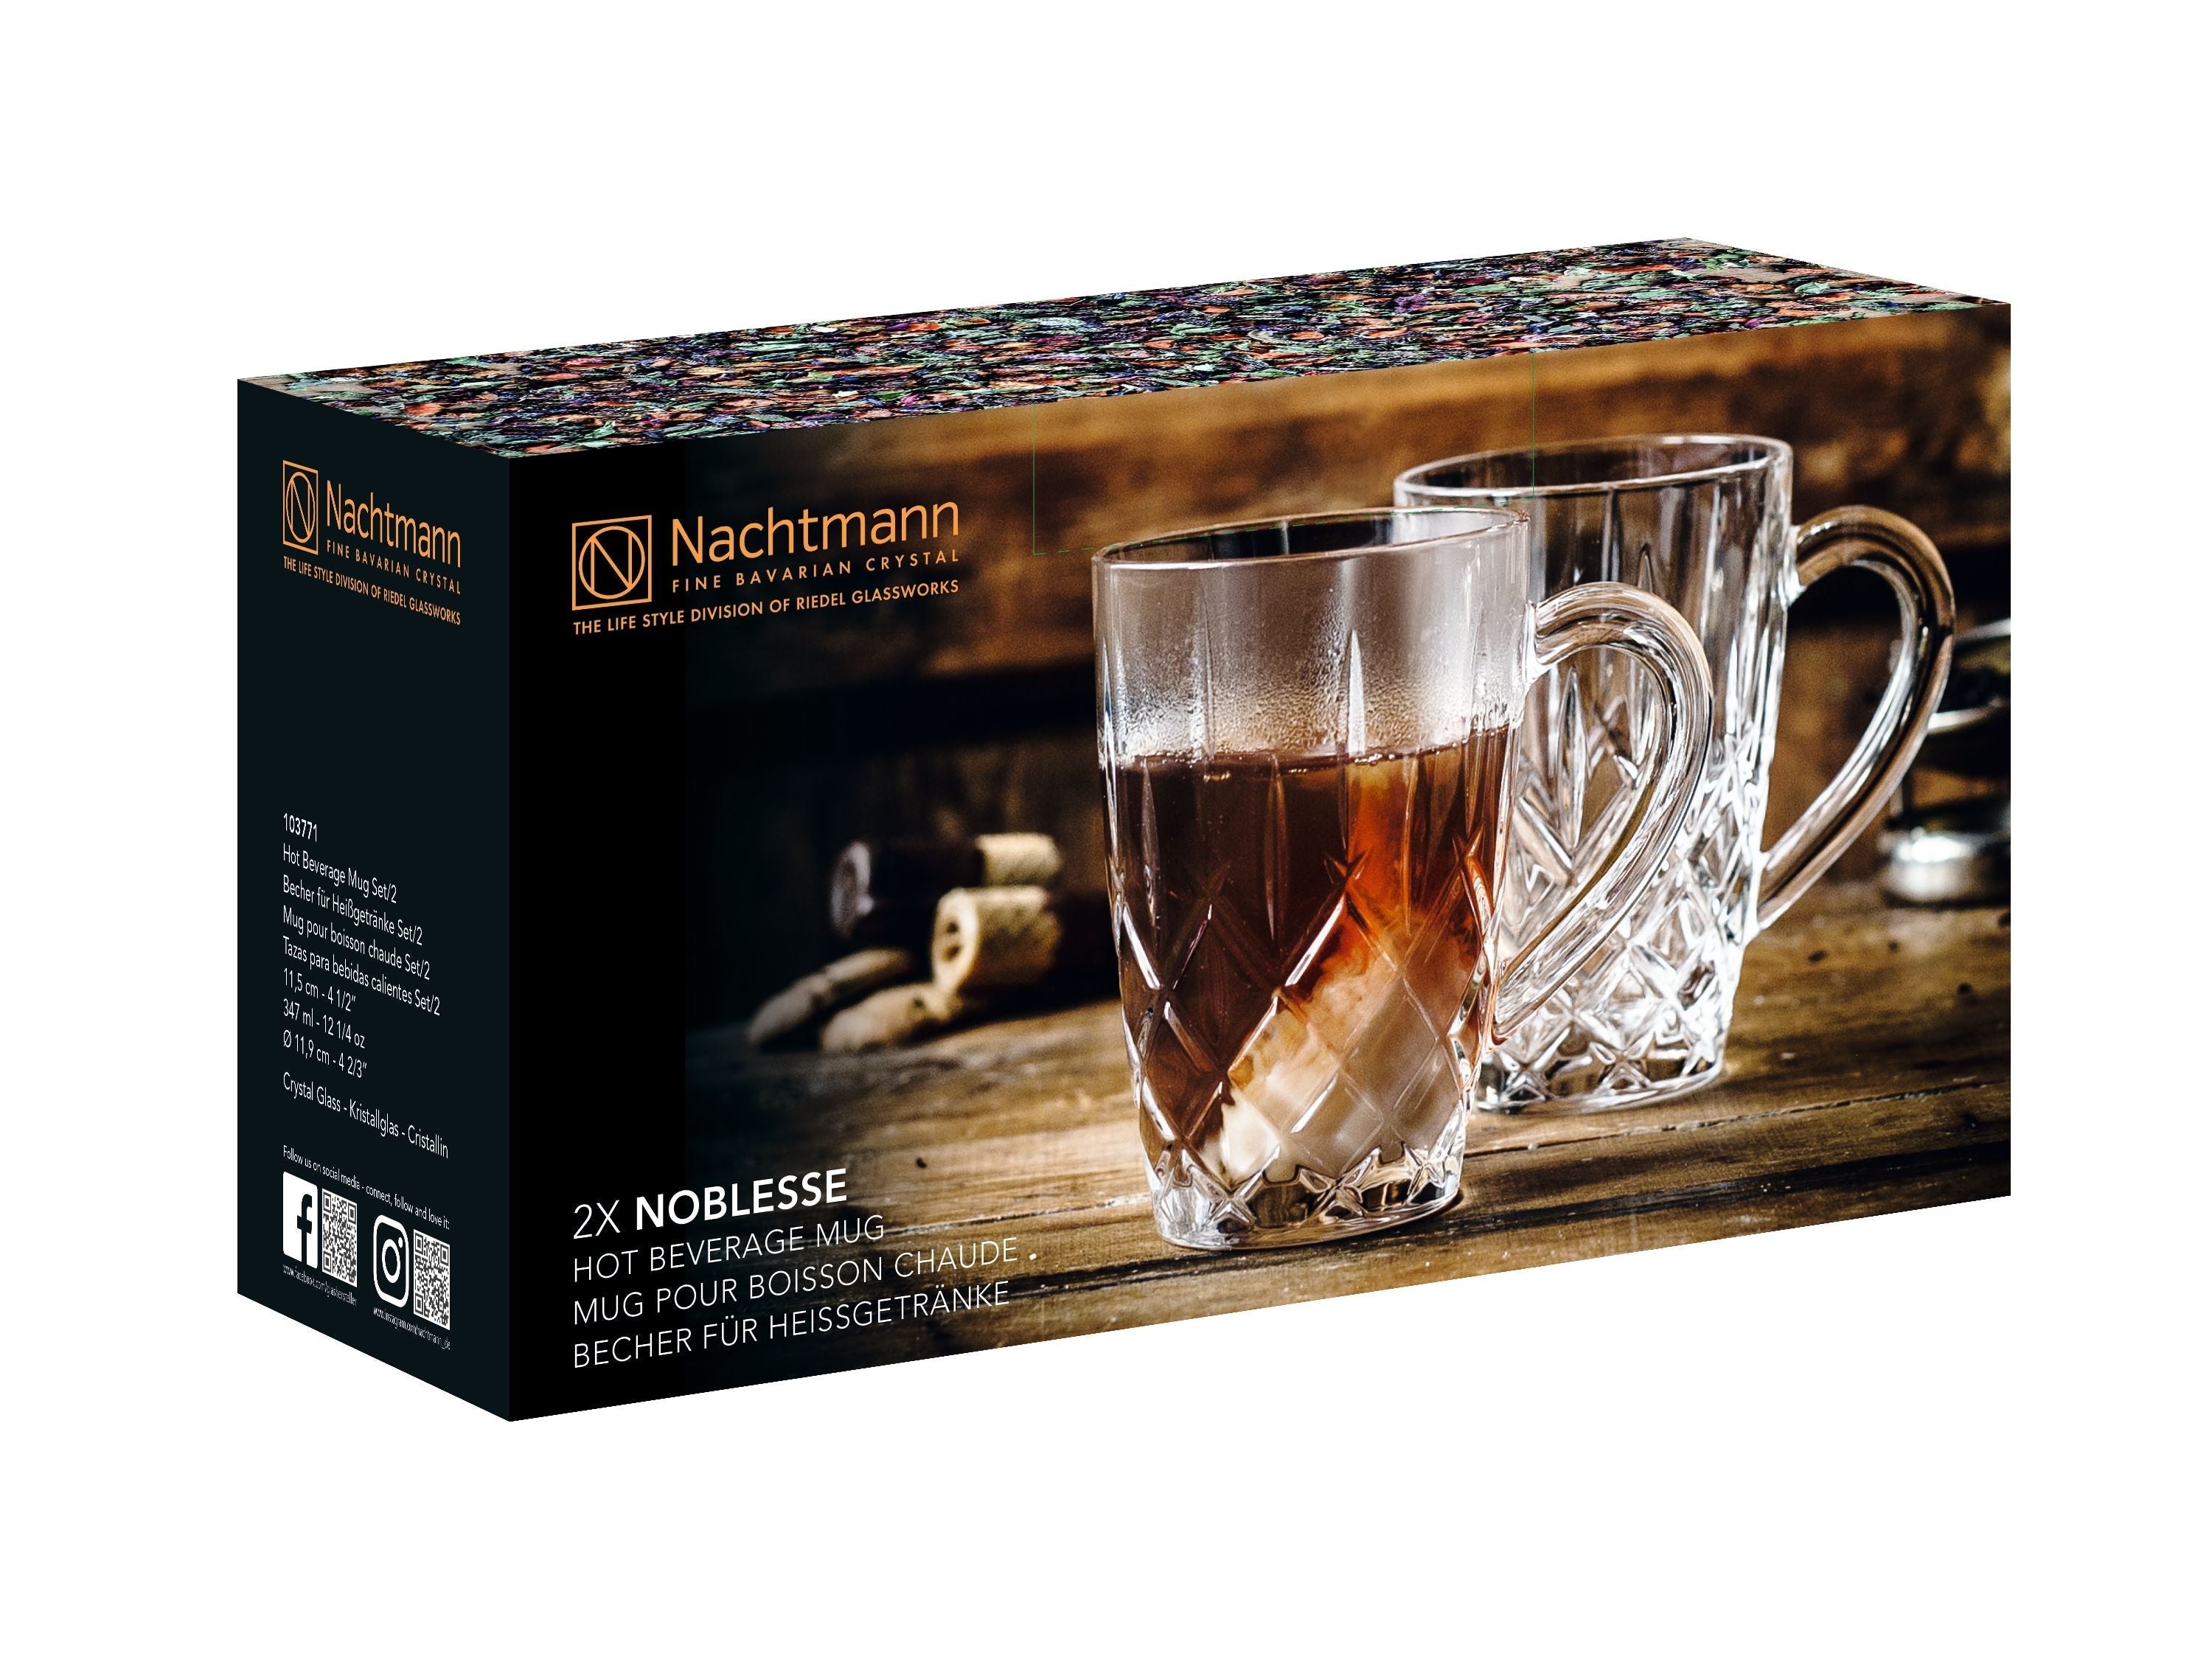 Nachtmann Noblesse Mug For Hot Drinks, Set Of 2